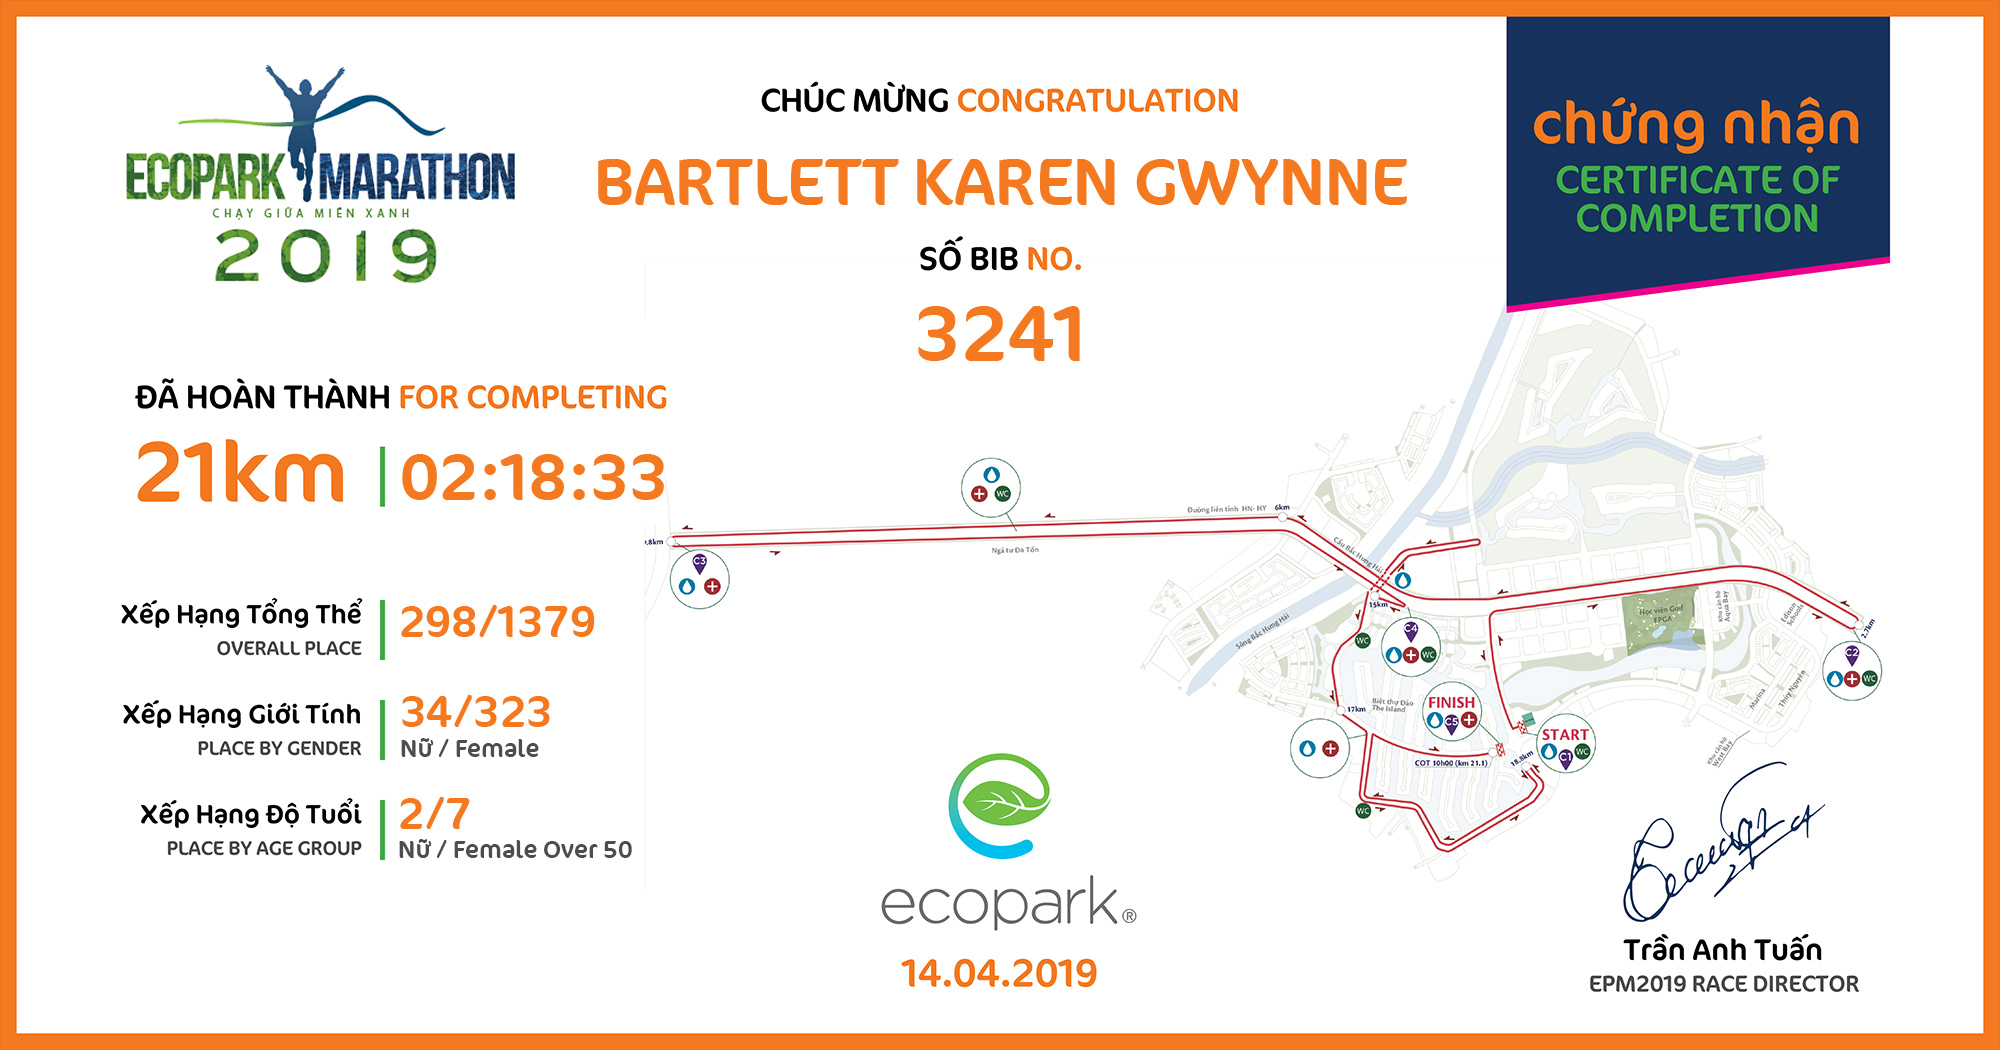 3241 - Bartlett Karen Gwynne